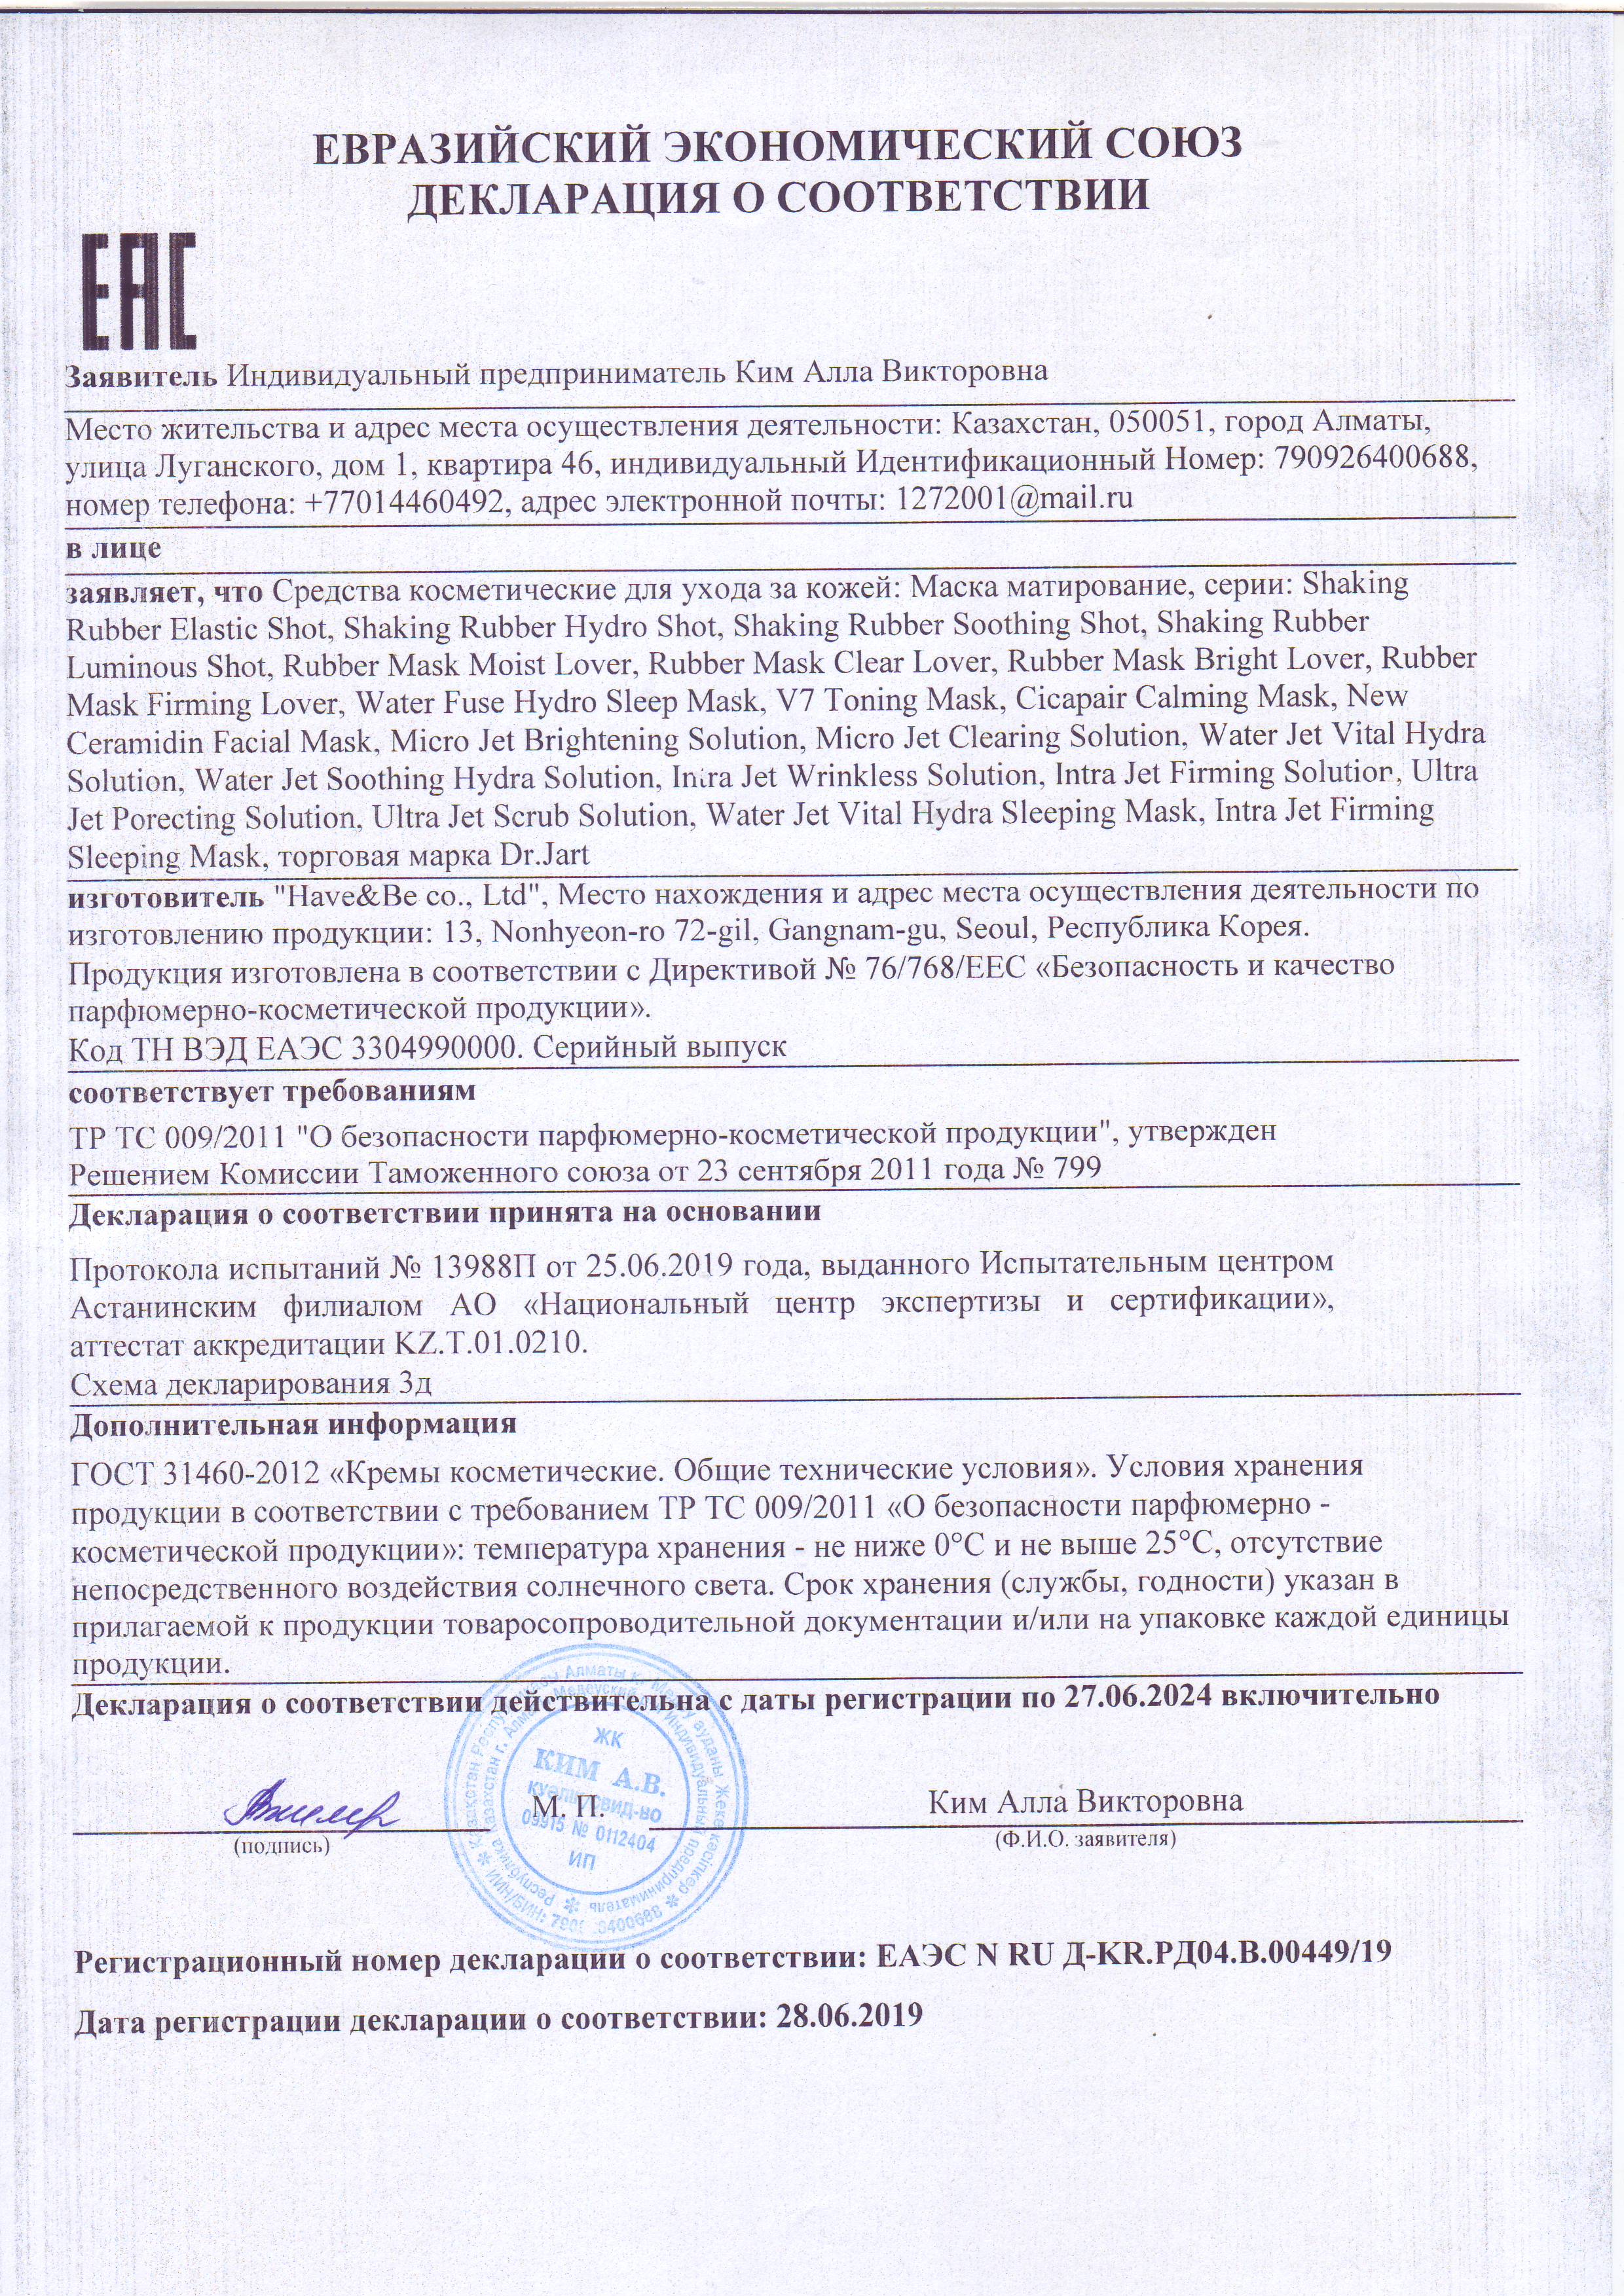 сертификат др джарт 1